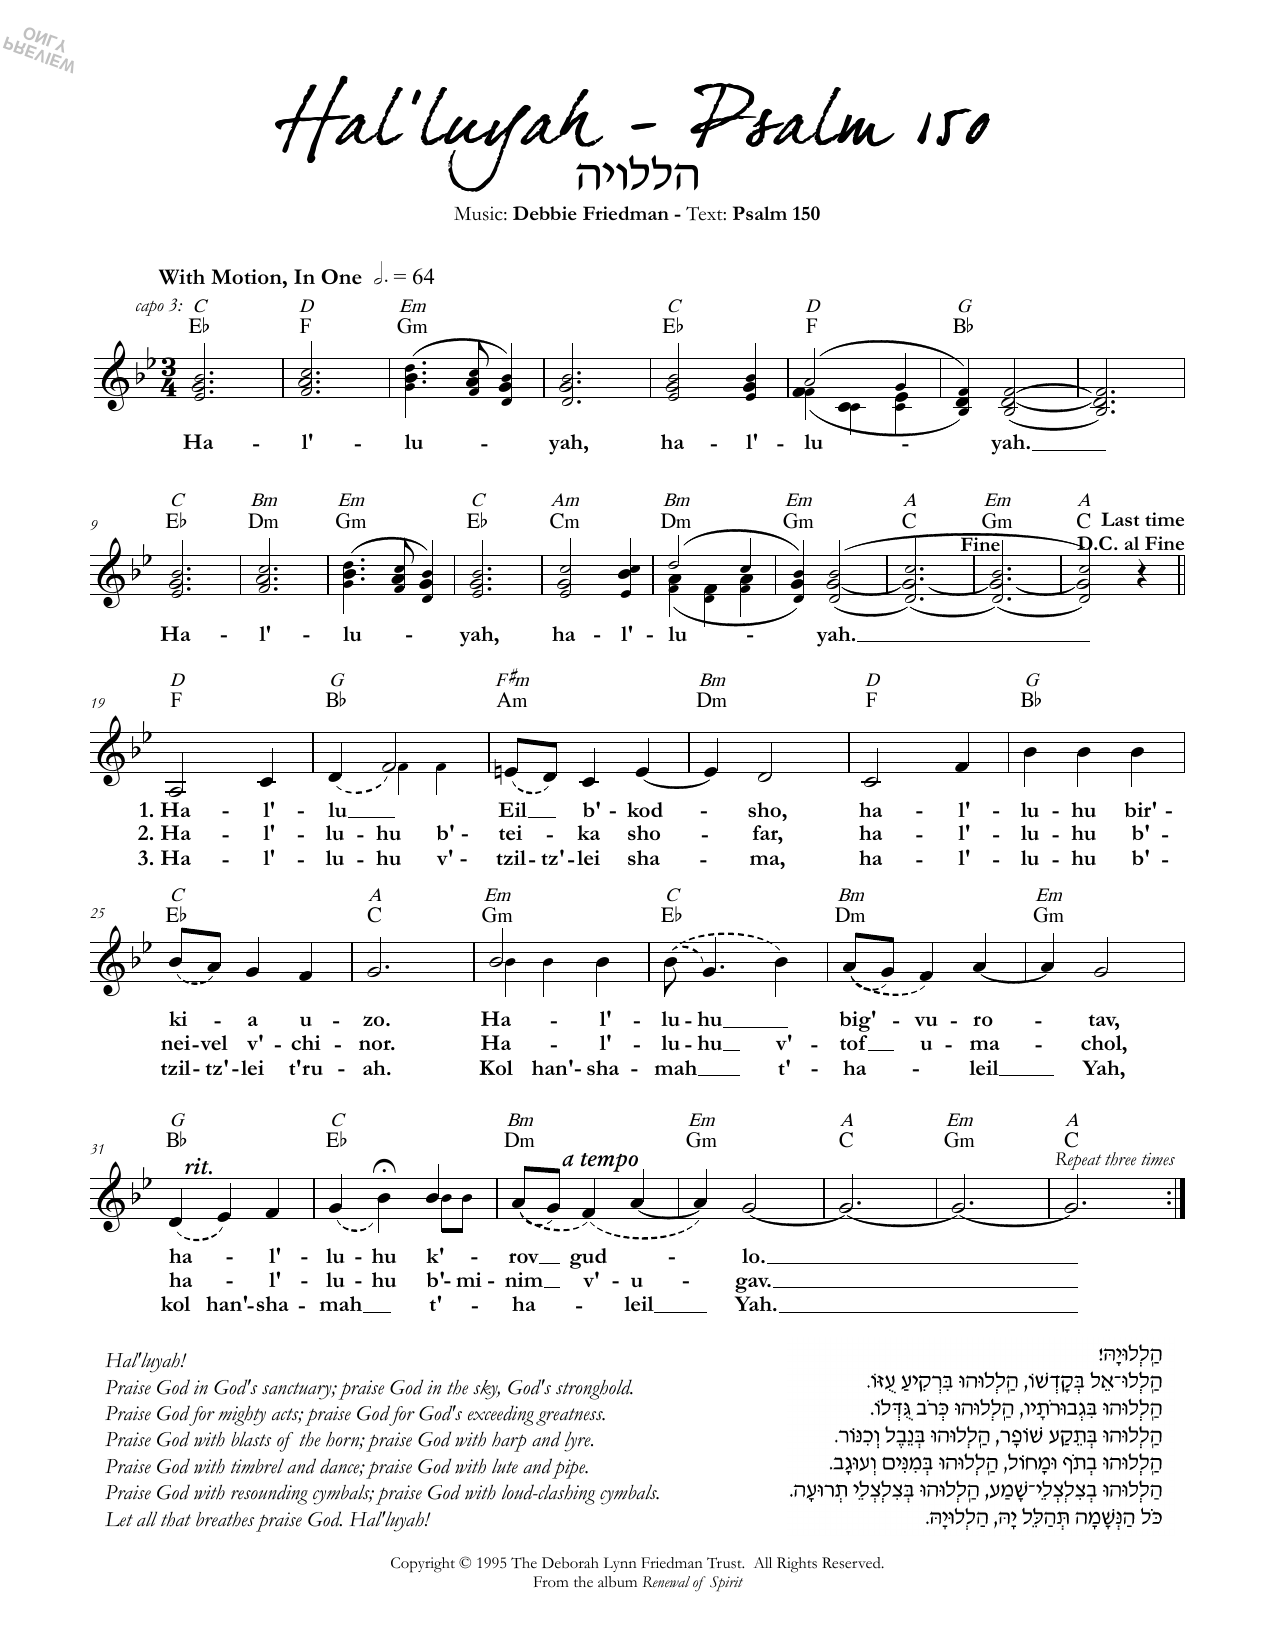 Debbie Friedman Hal'luyah - Psalm 150 Sheet Music Notes & Chords for Lead Sheet / Fake Book - Download or Print PDF